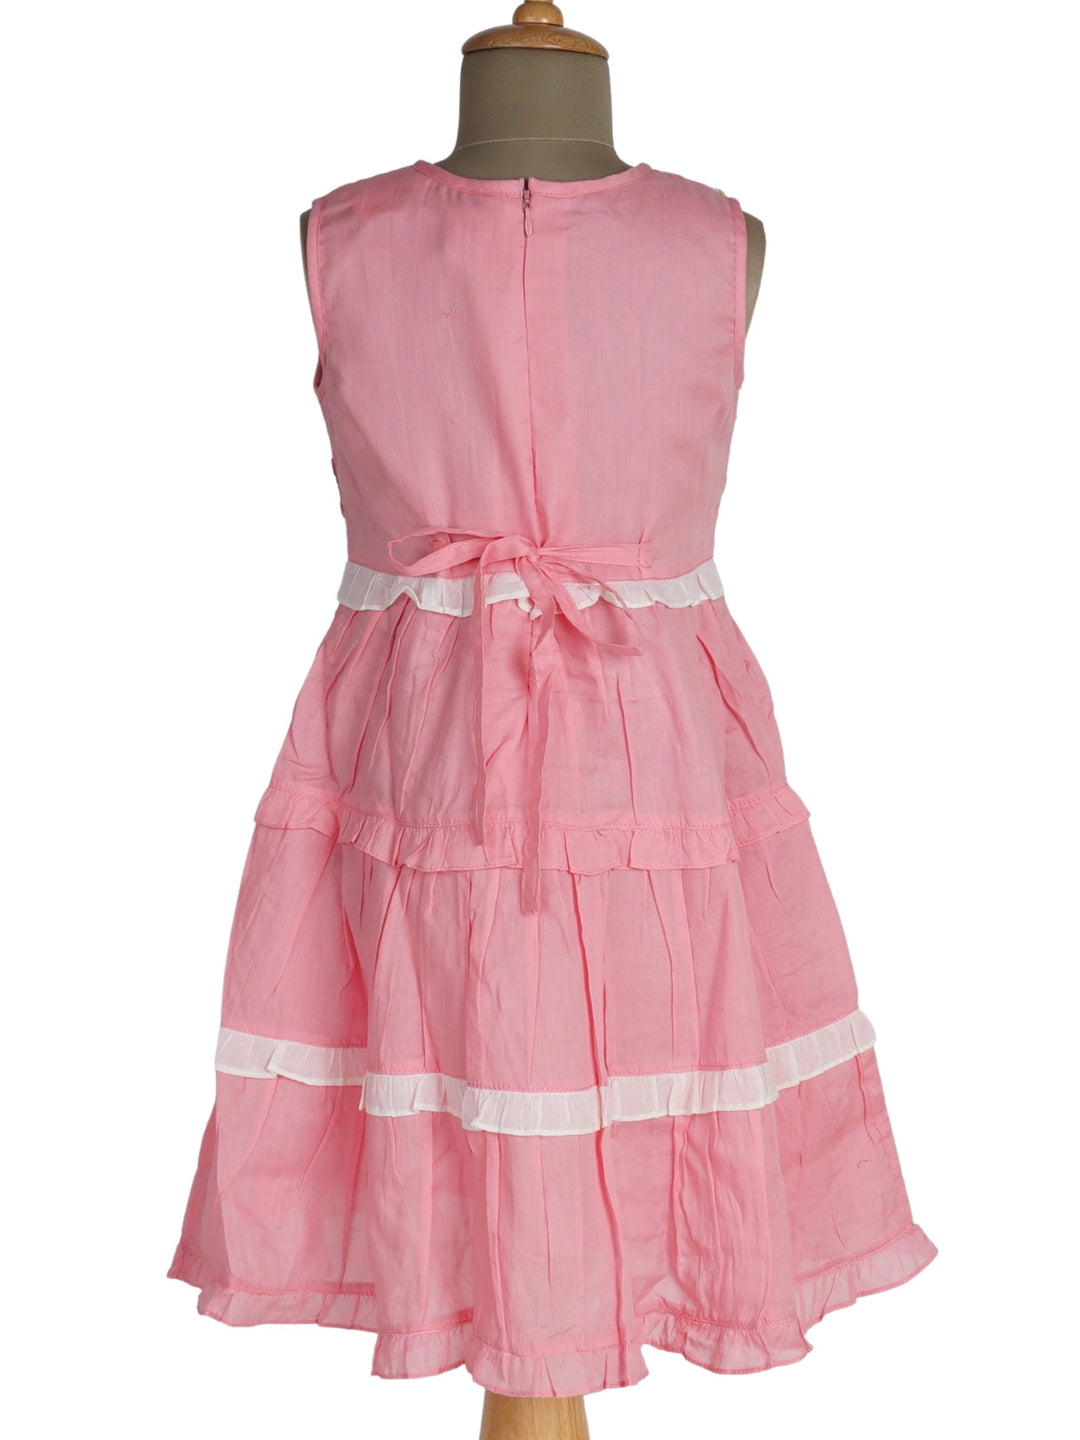 The Nesavu Frocks & Dresses Simple Yet Elegant Embroidery Baby Pink Cotton Dress psr silks Nesavu